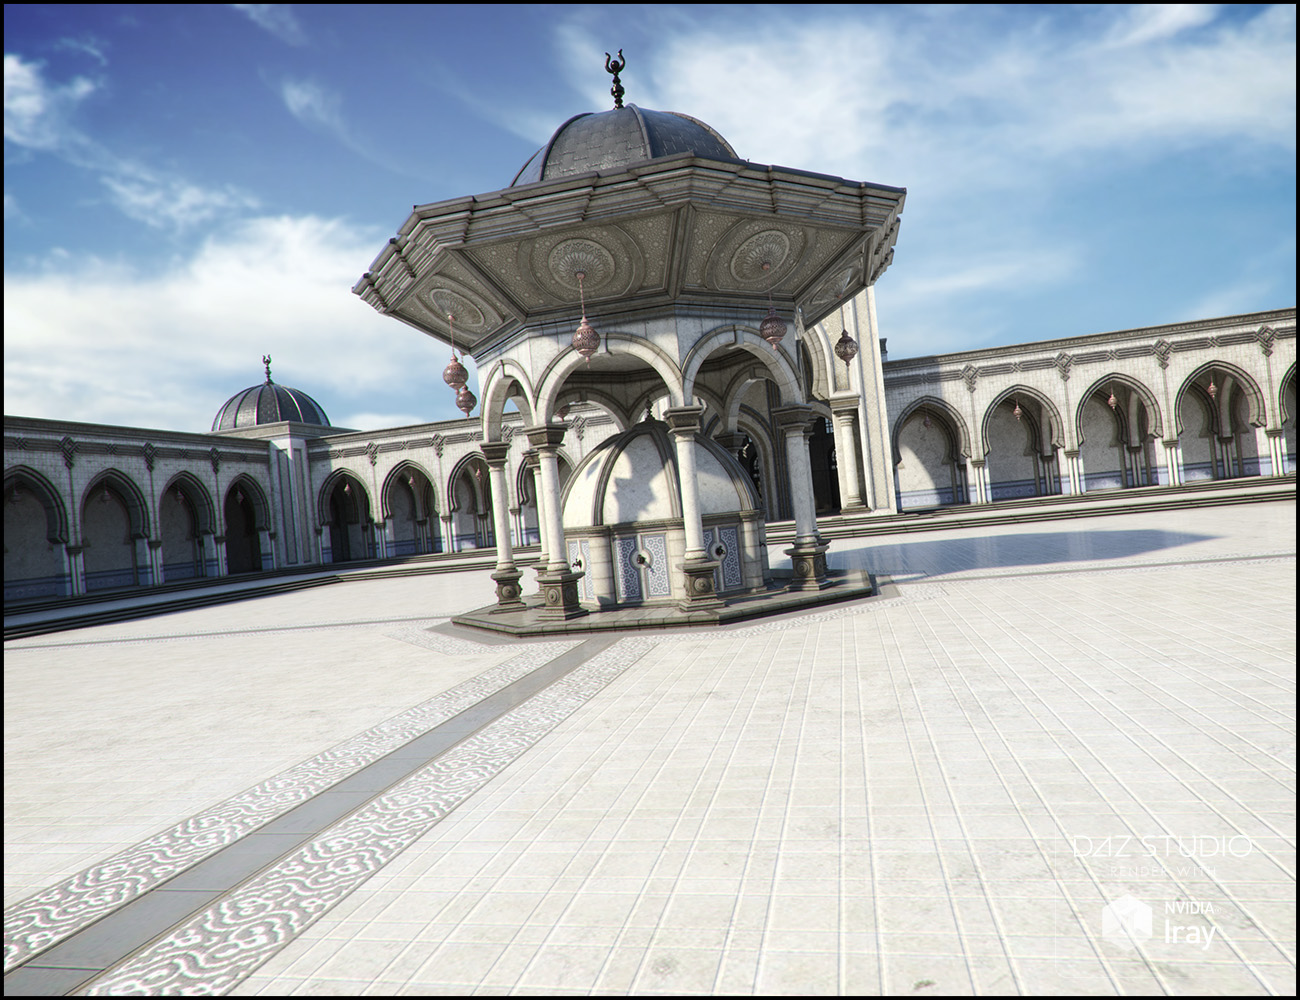 Kingdom of Marrakesh Iray Addon by: Jack Tomalin, 3D Models by Daz 3D